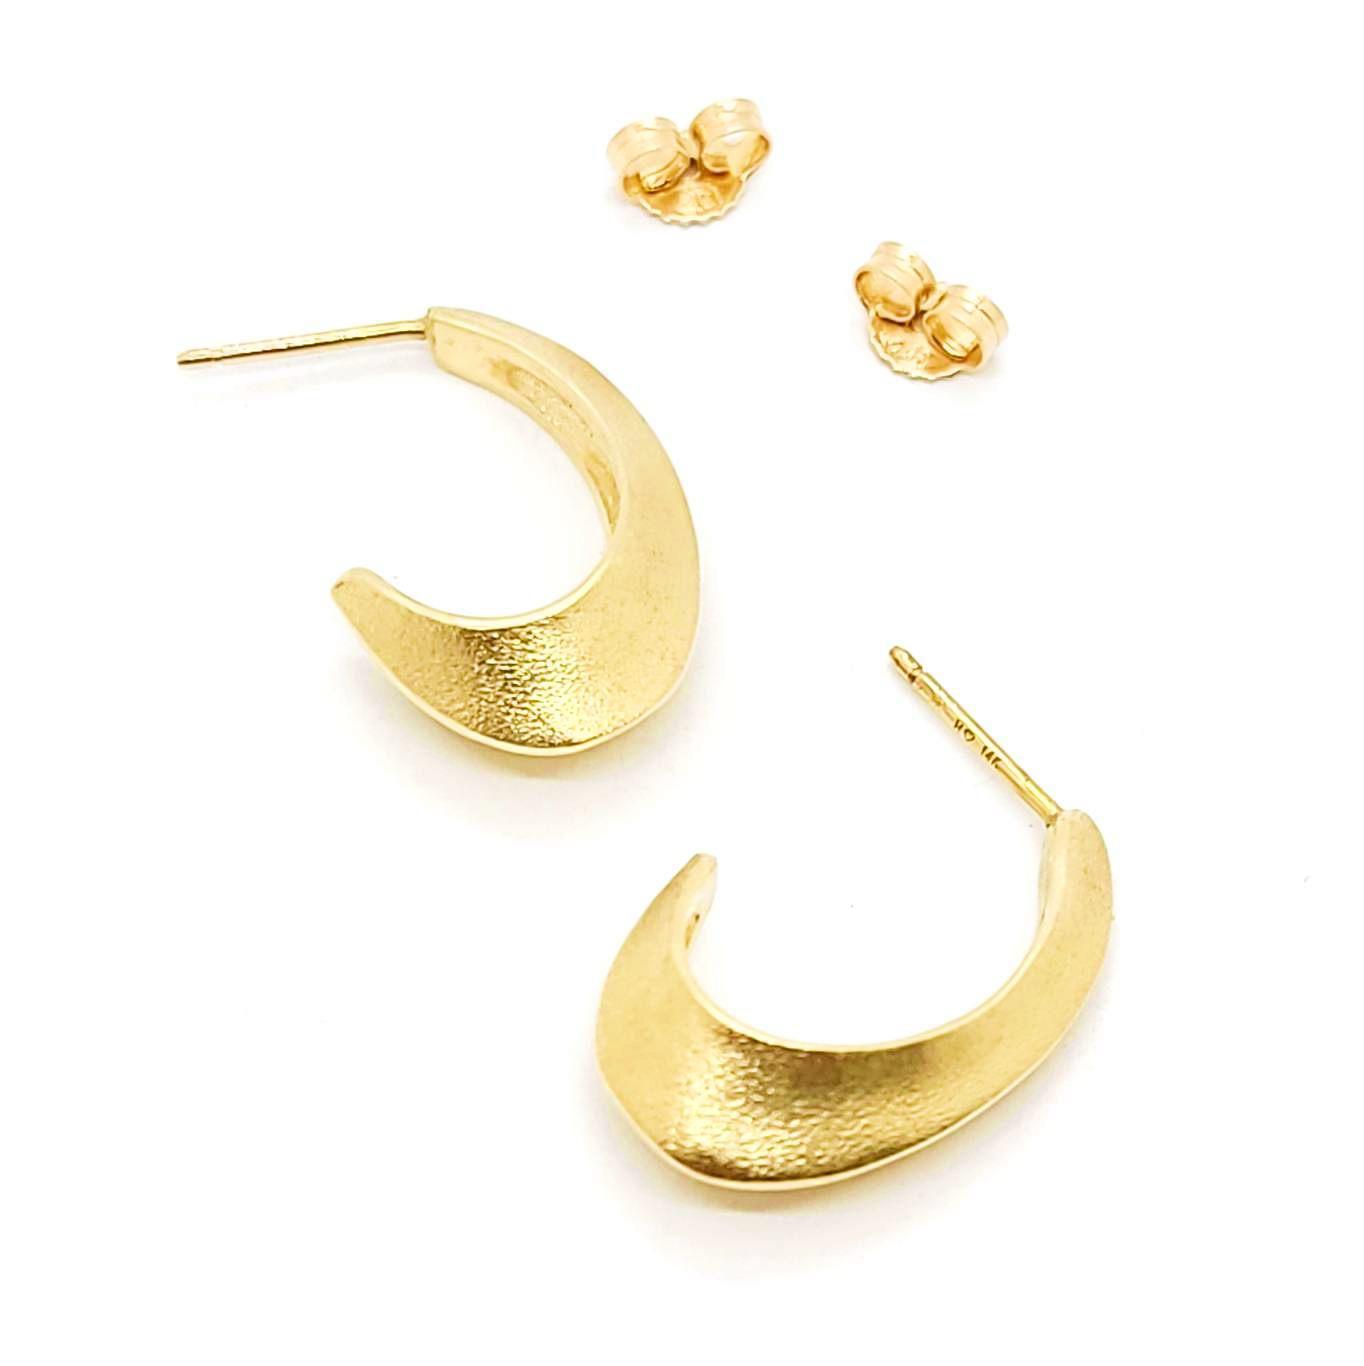 Earrings - Morph Hoops in 14k Yellow Gold by Corey Egan